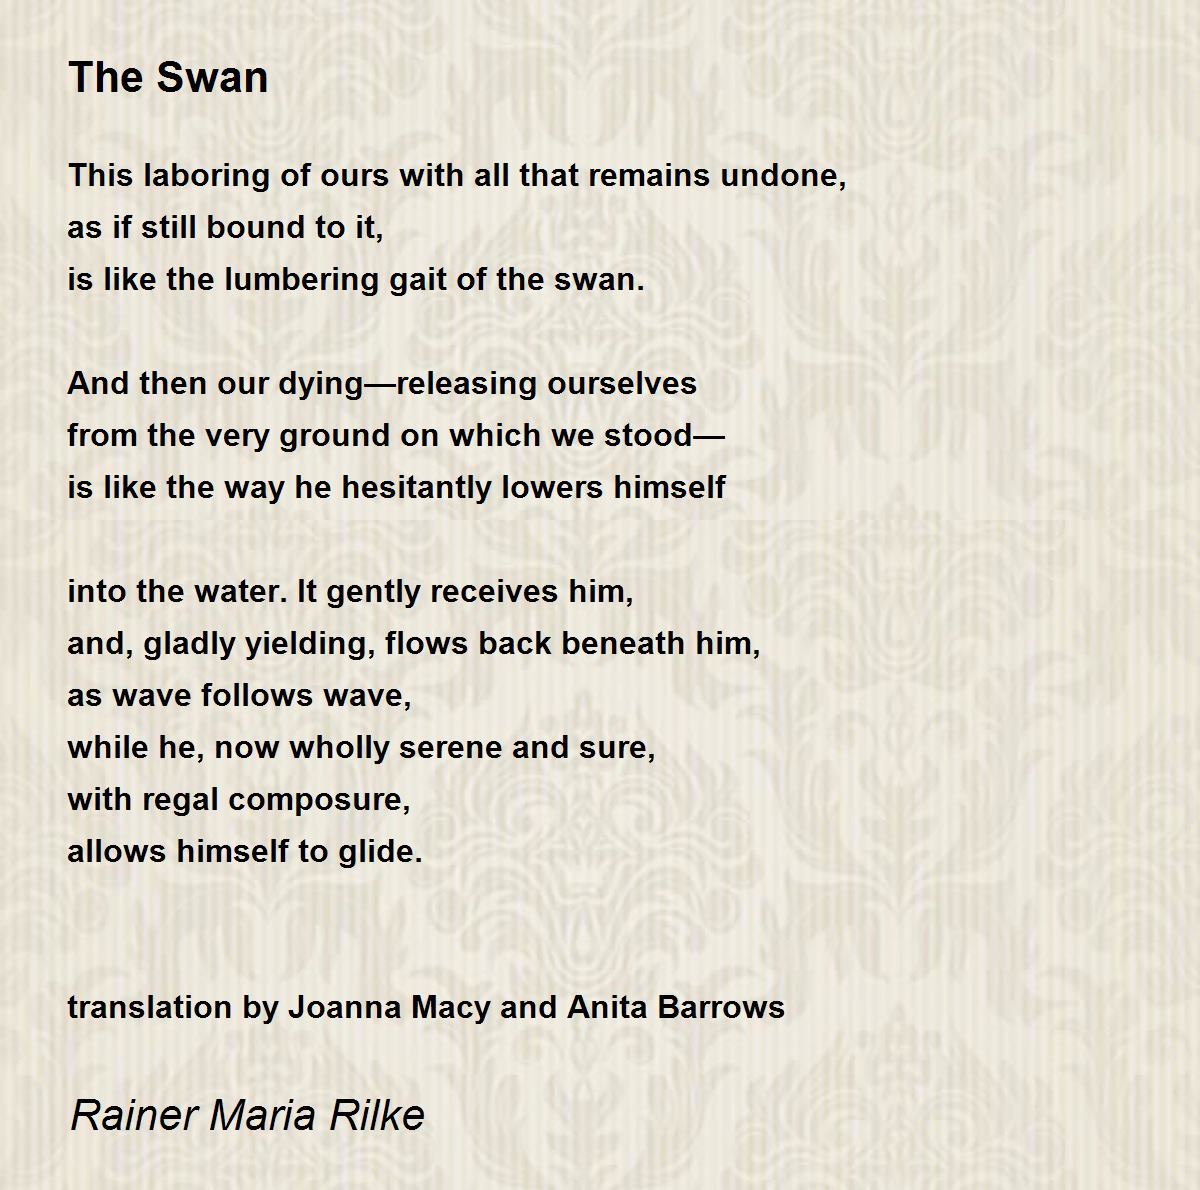 The Swan by Rainer Maria Rilke - The Swan Poem